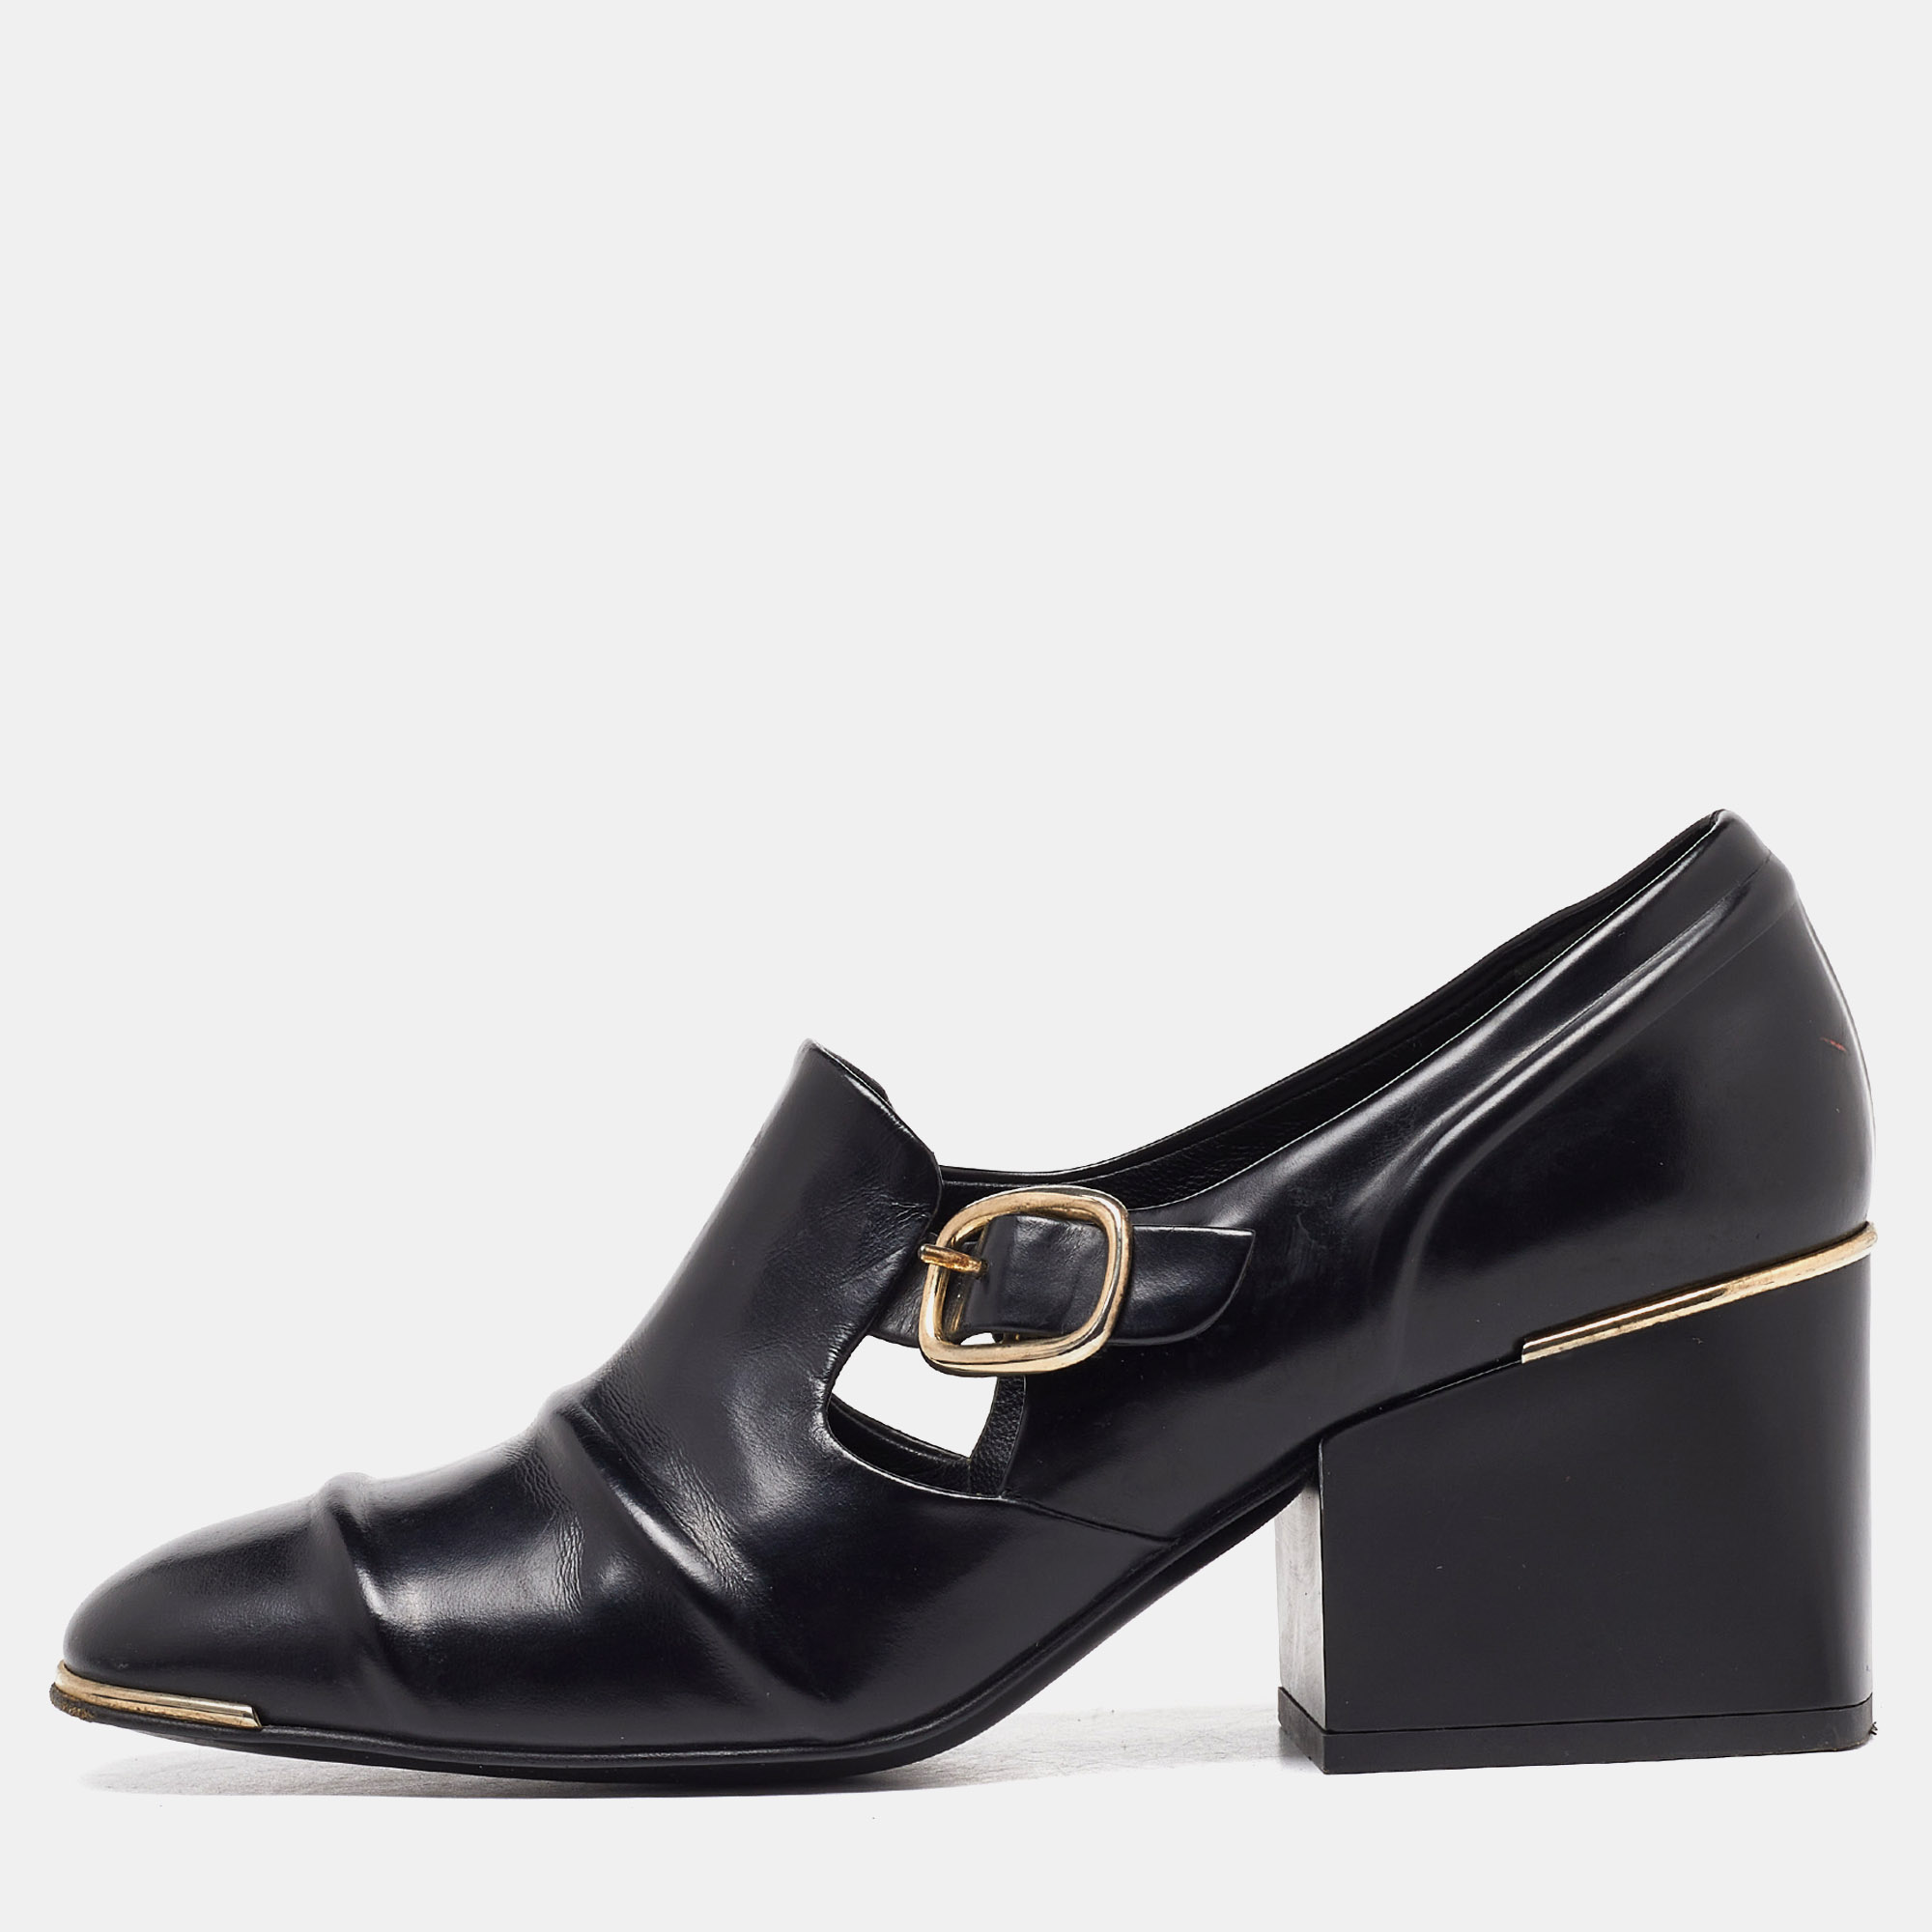 Balenciaga black leather loafer pumps size 36